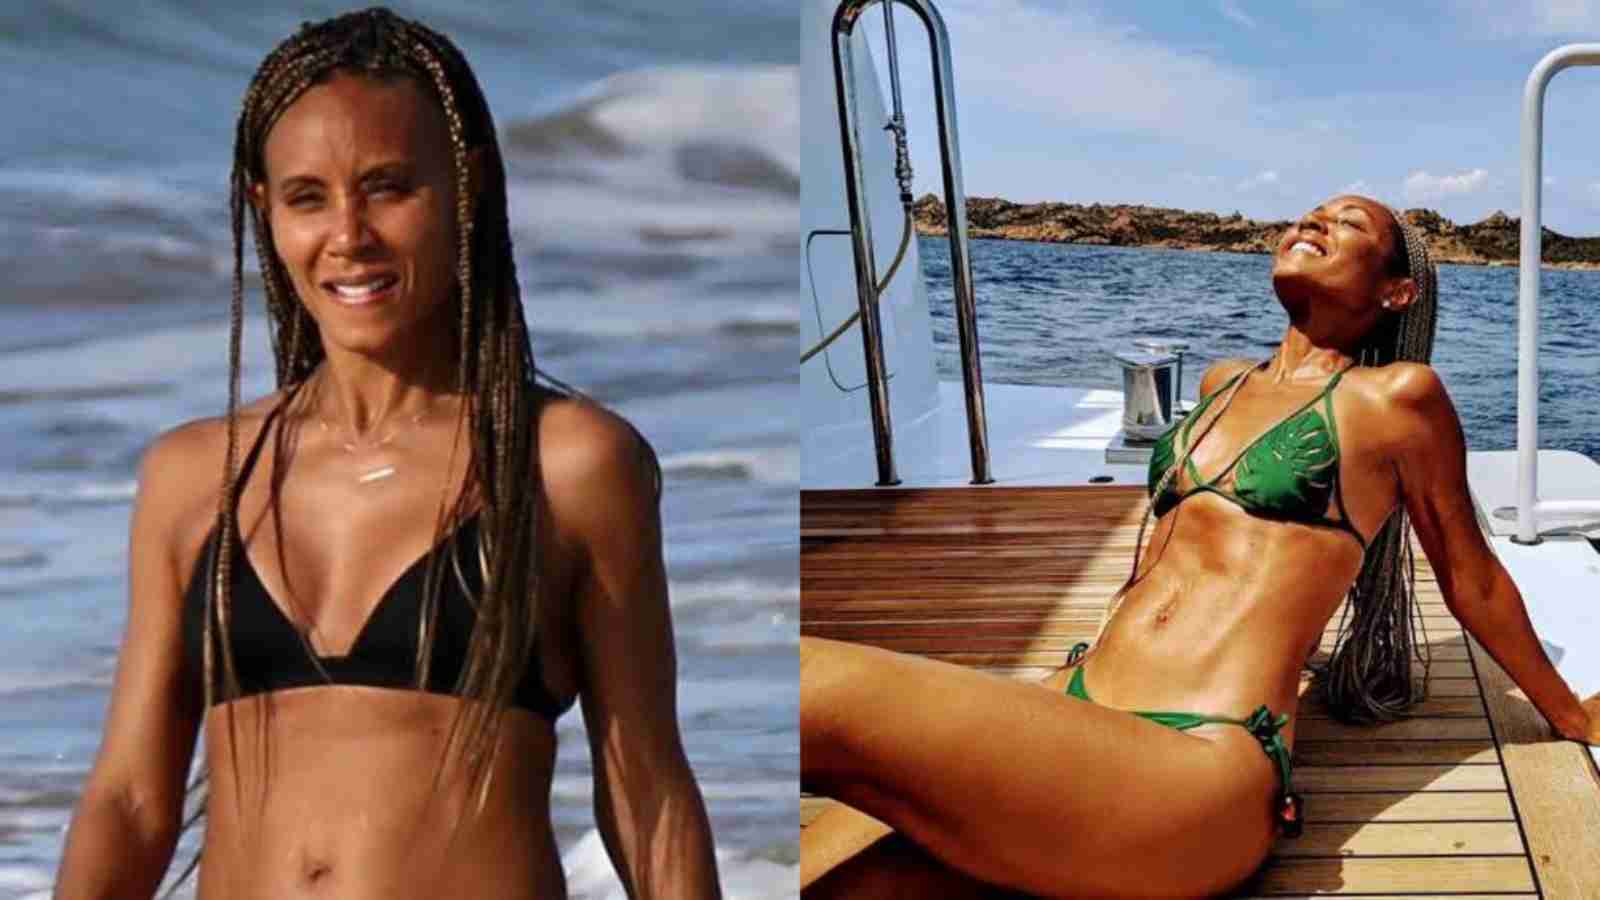 Jada Pinkett Smith and her bikini body